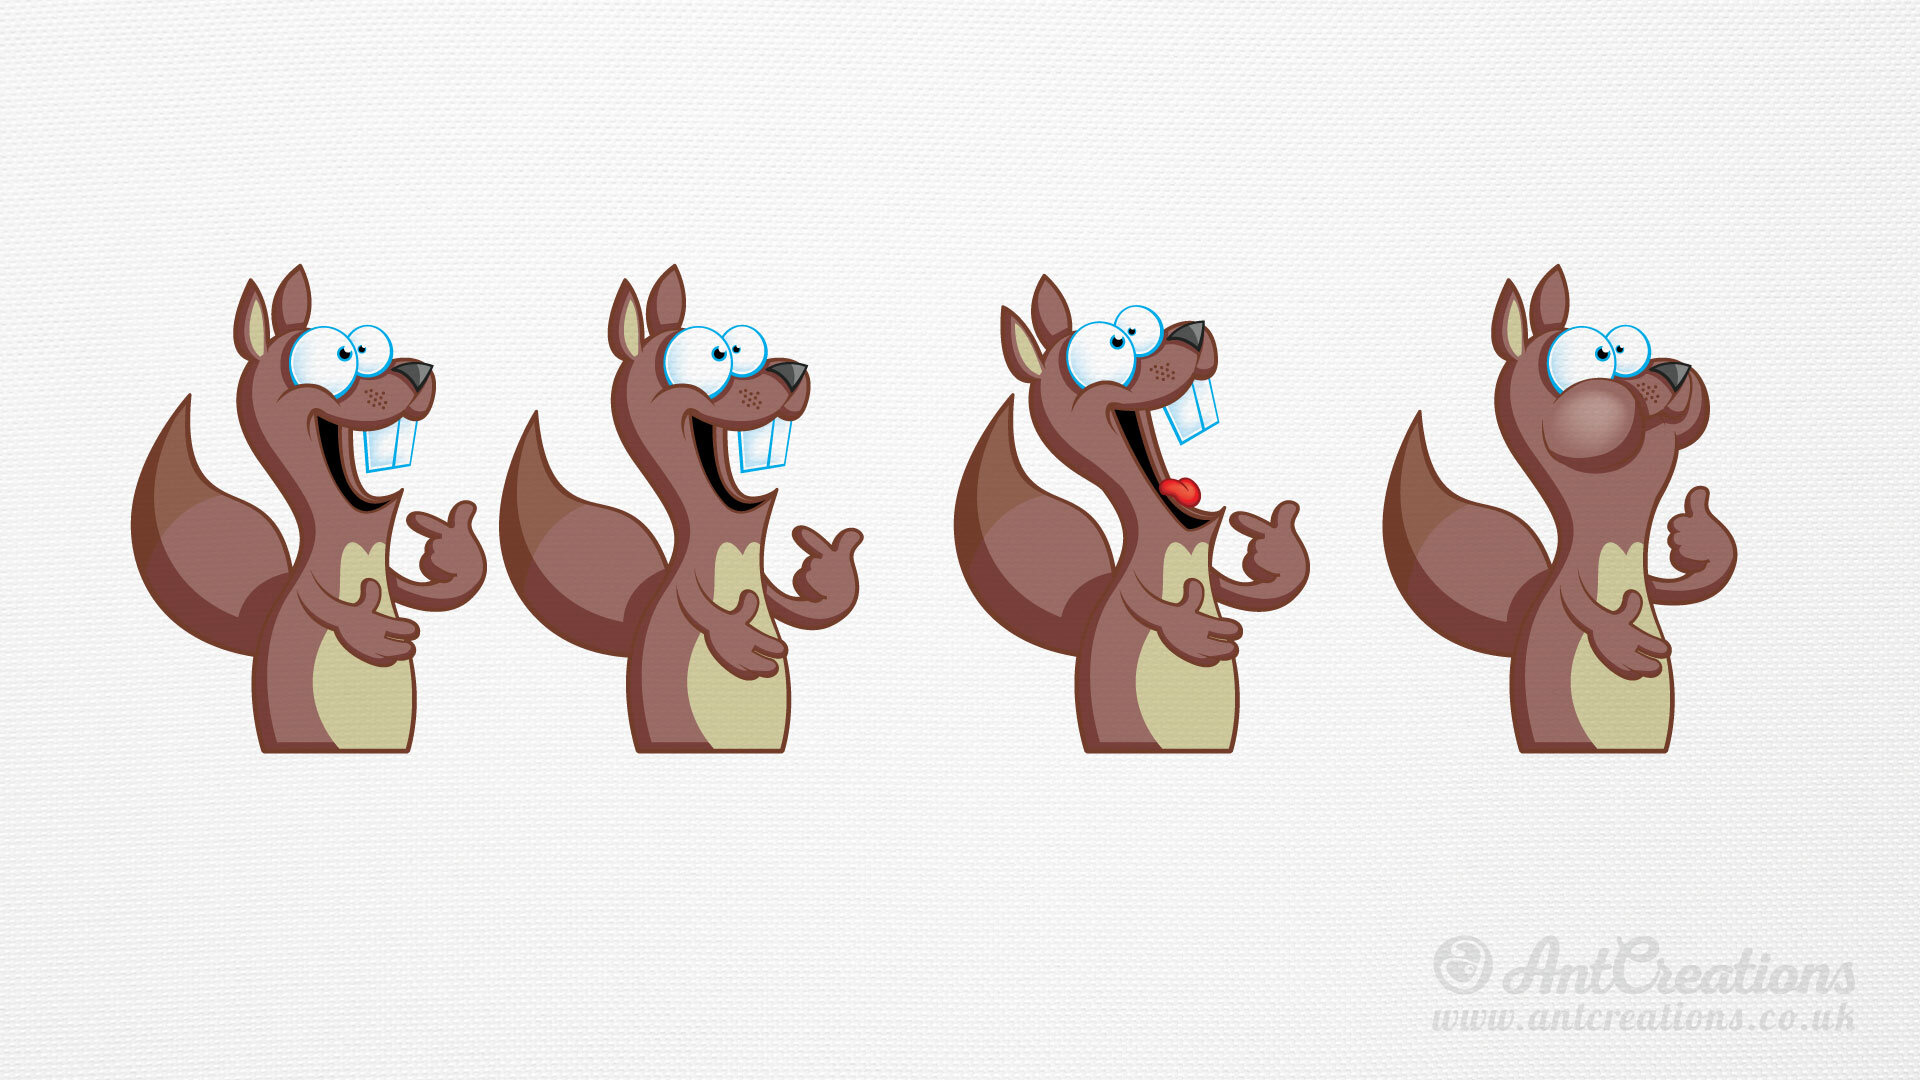 AntCreations-Squirrels01.jpg